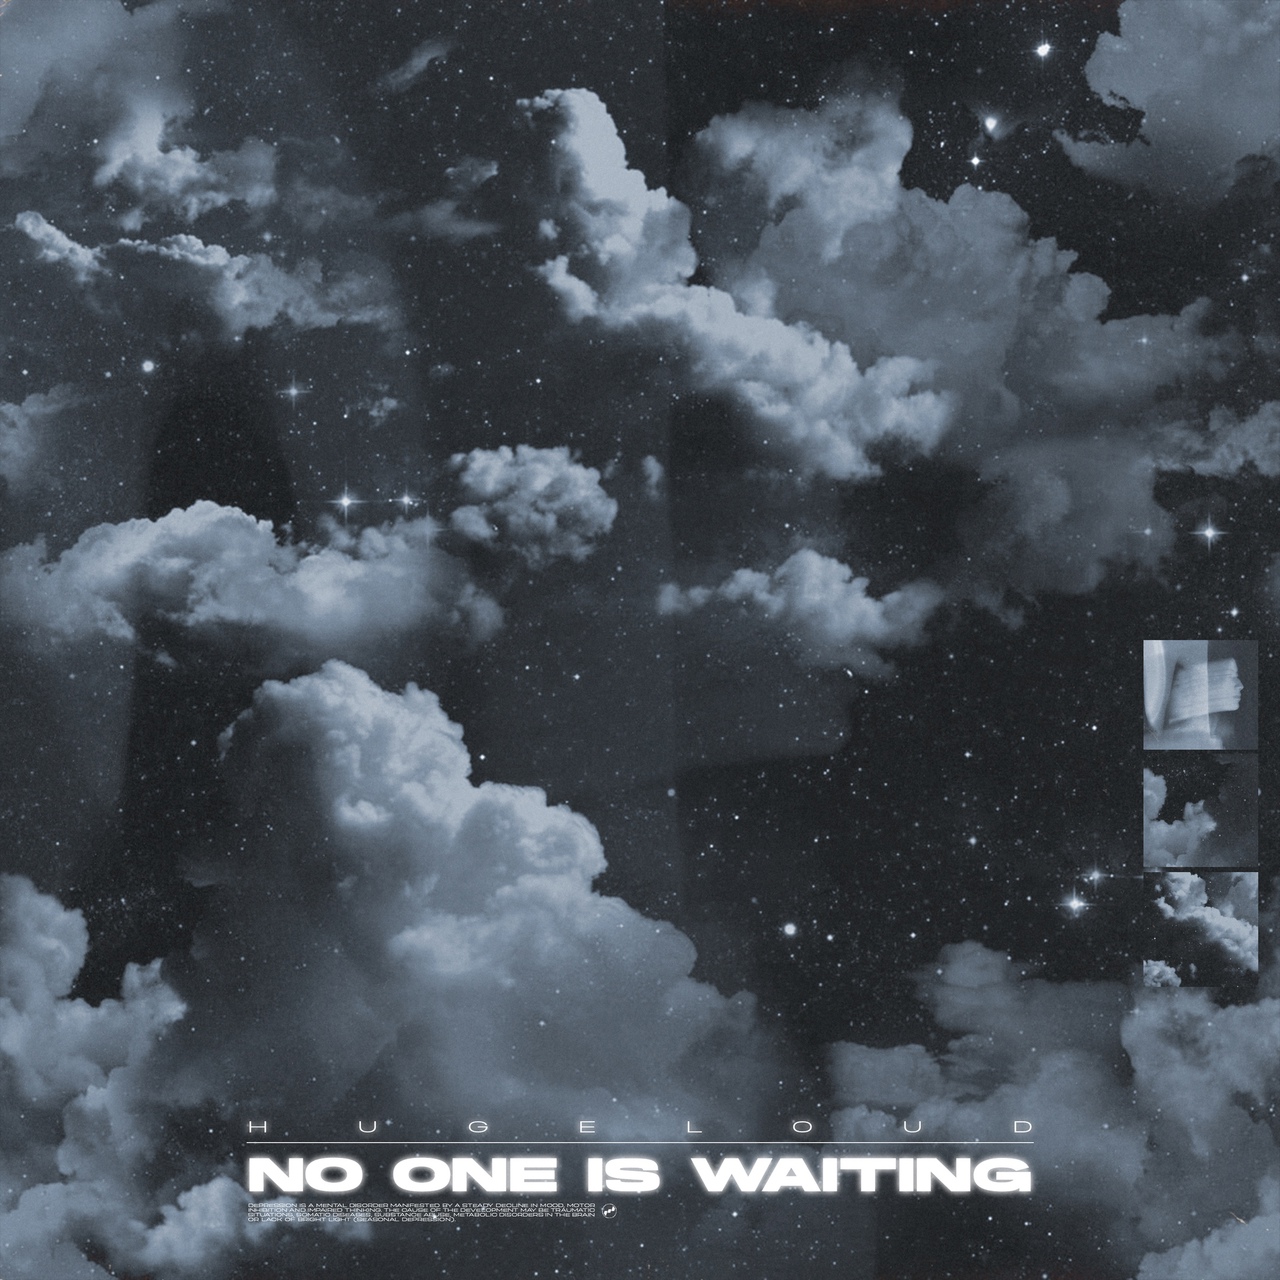 Hugeloud - No One Is Waiting